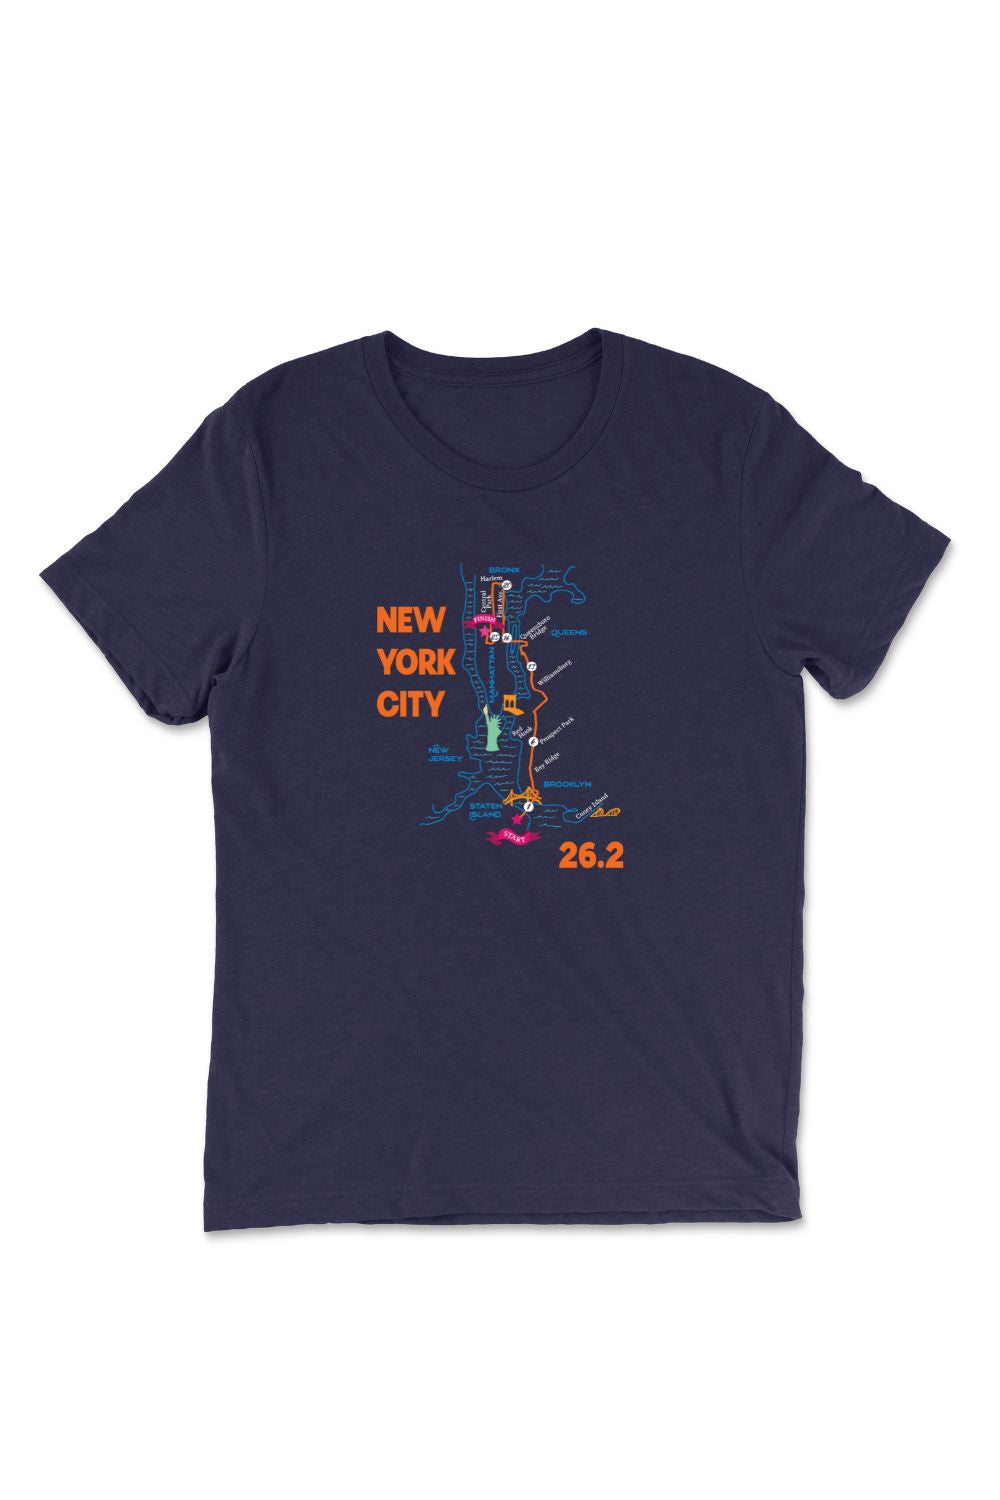 NYC Map - Marathon T-Shirt